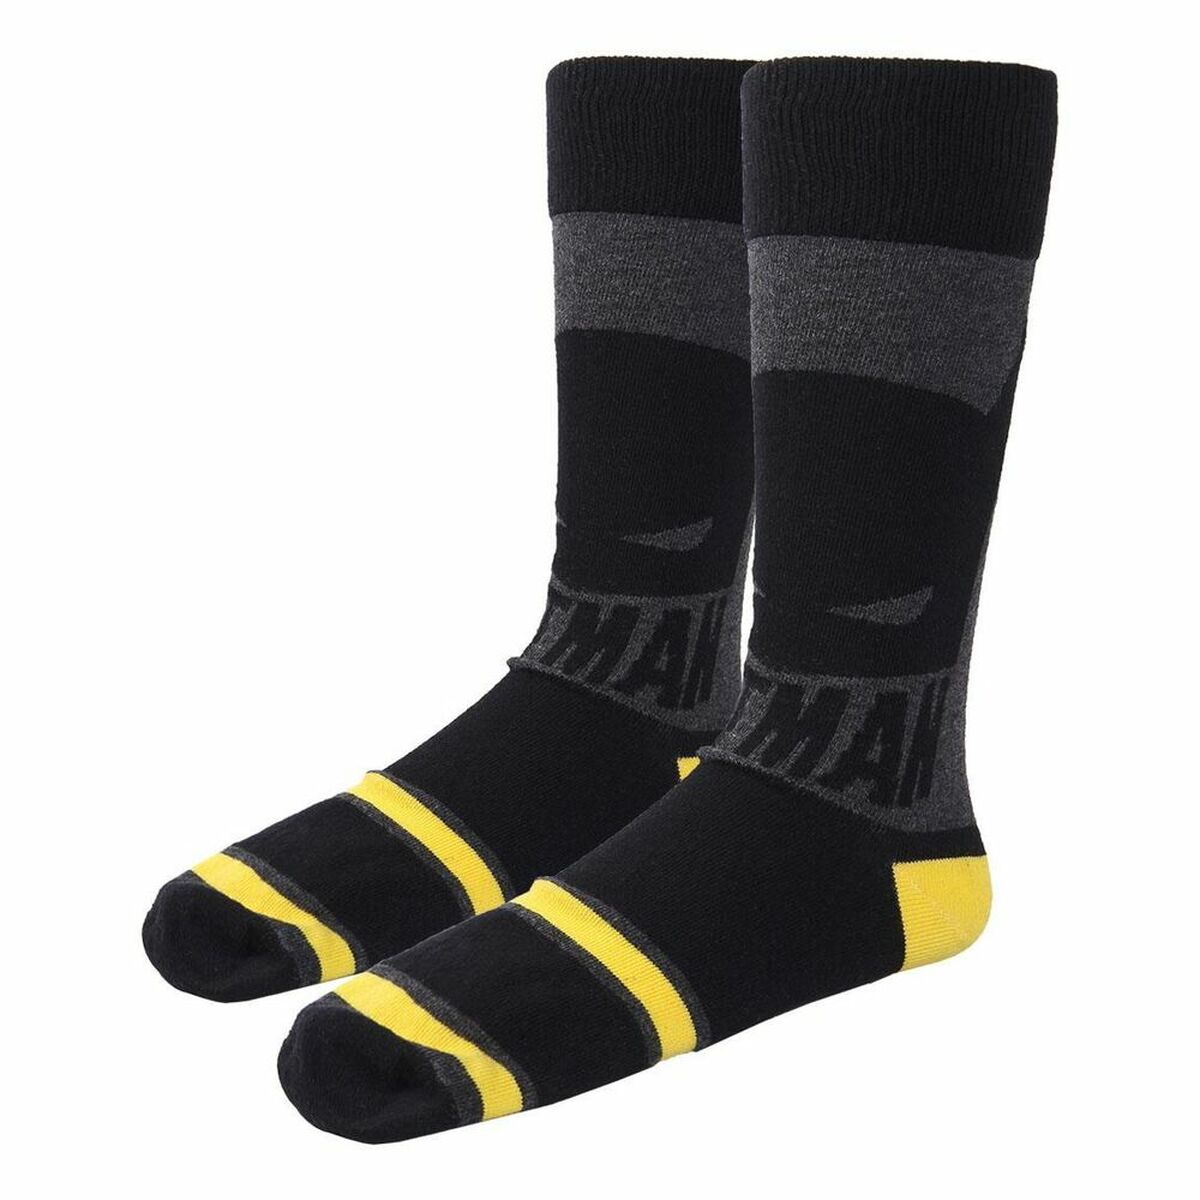 Socks Batman 3 pairs One size (36-41)